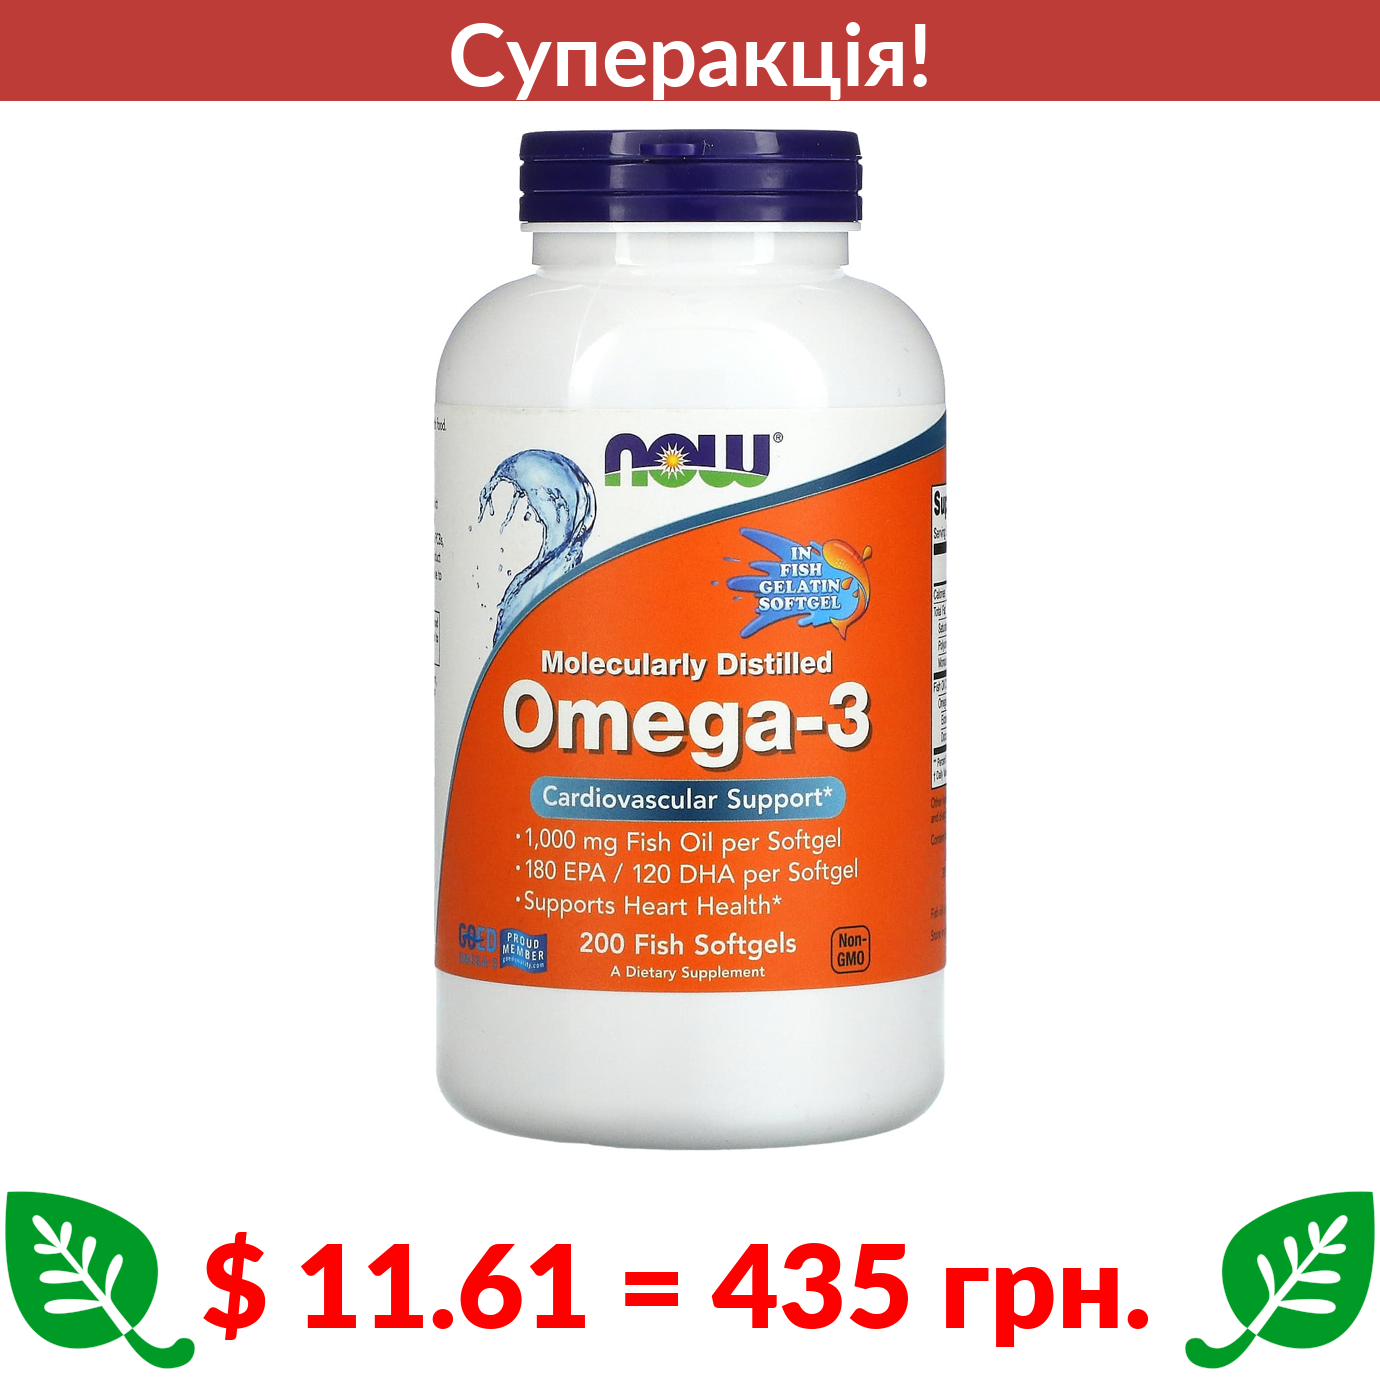 Now omega купить. Red Omega (180 капс.). Now foods, Omega-3, 180 EPA / 120 DHA, 100 Softgels. Super Омега-3 1000 мг. Ультра Омега Now foods.